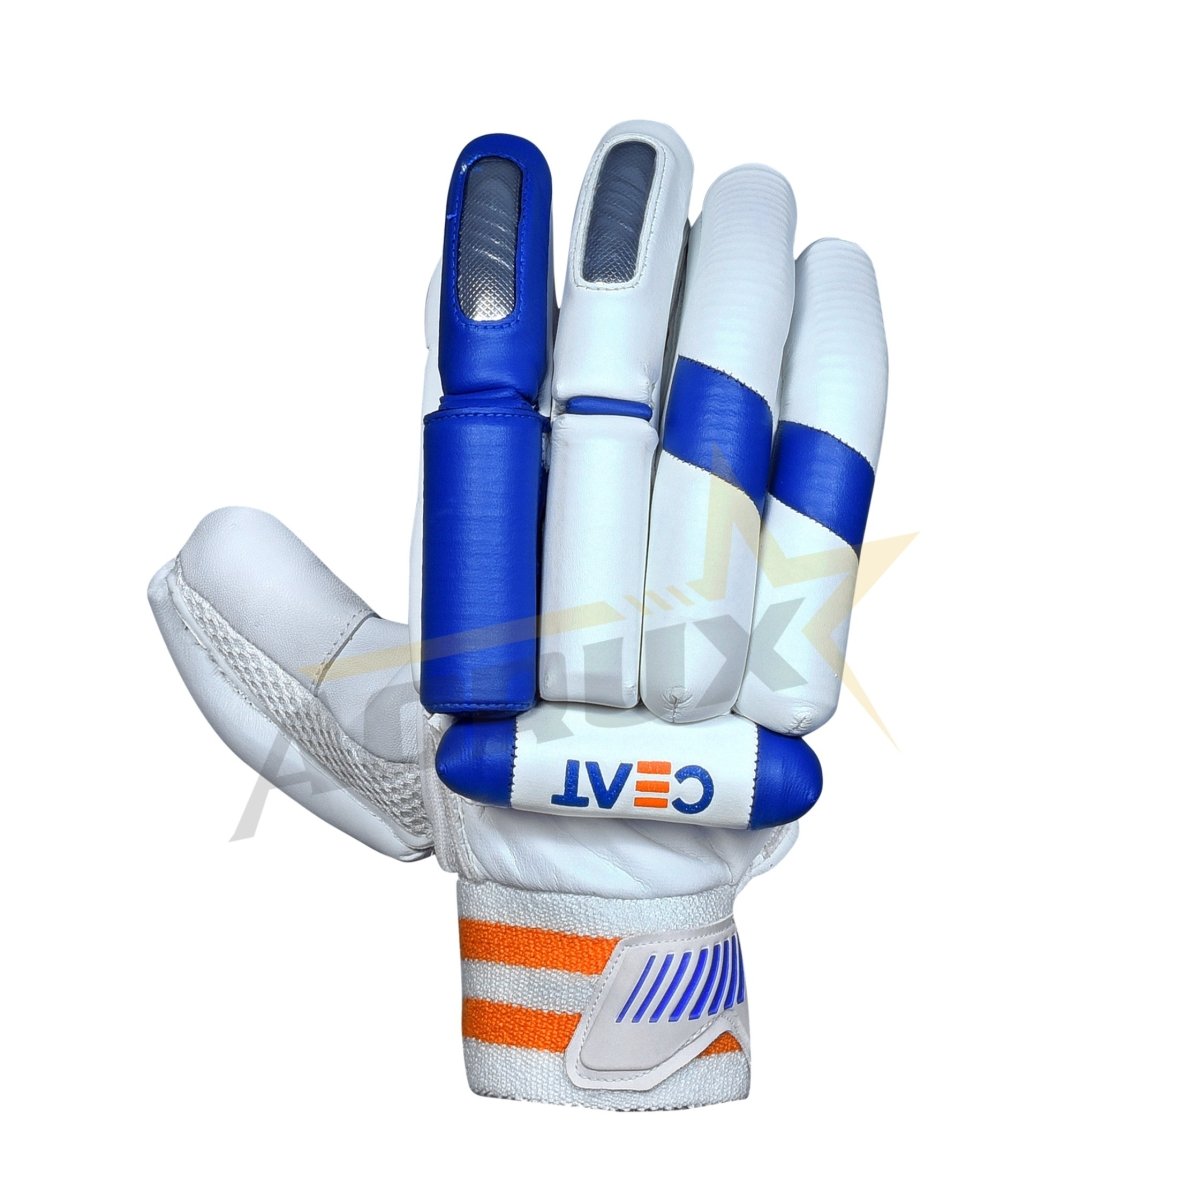 CEAT Secura Cricket Batting Gloves